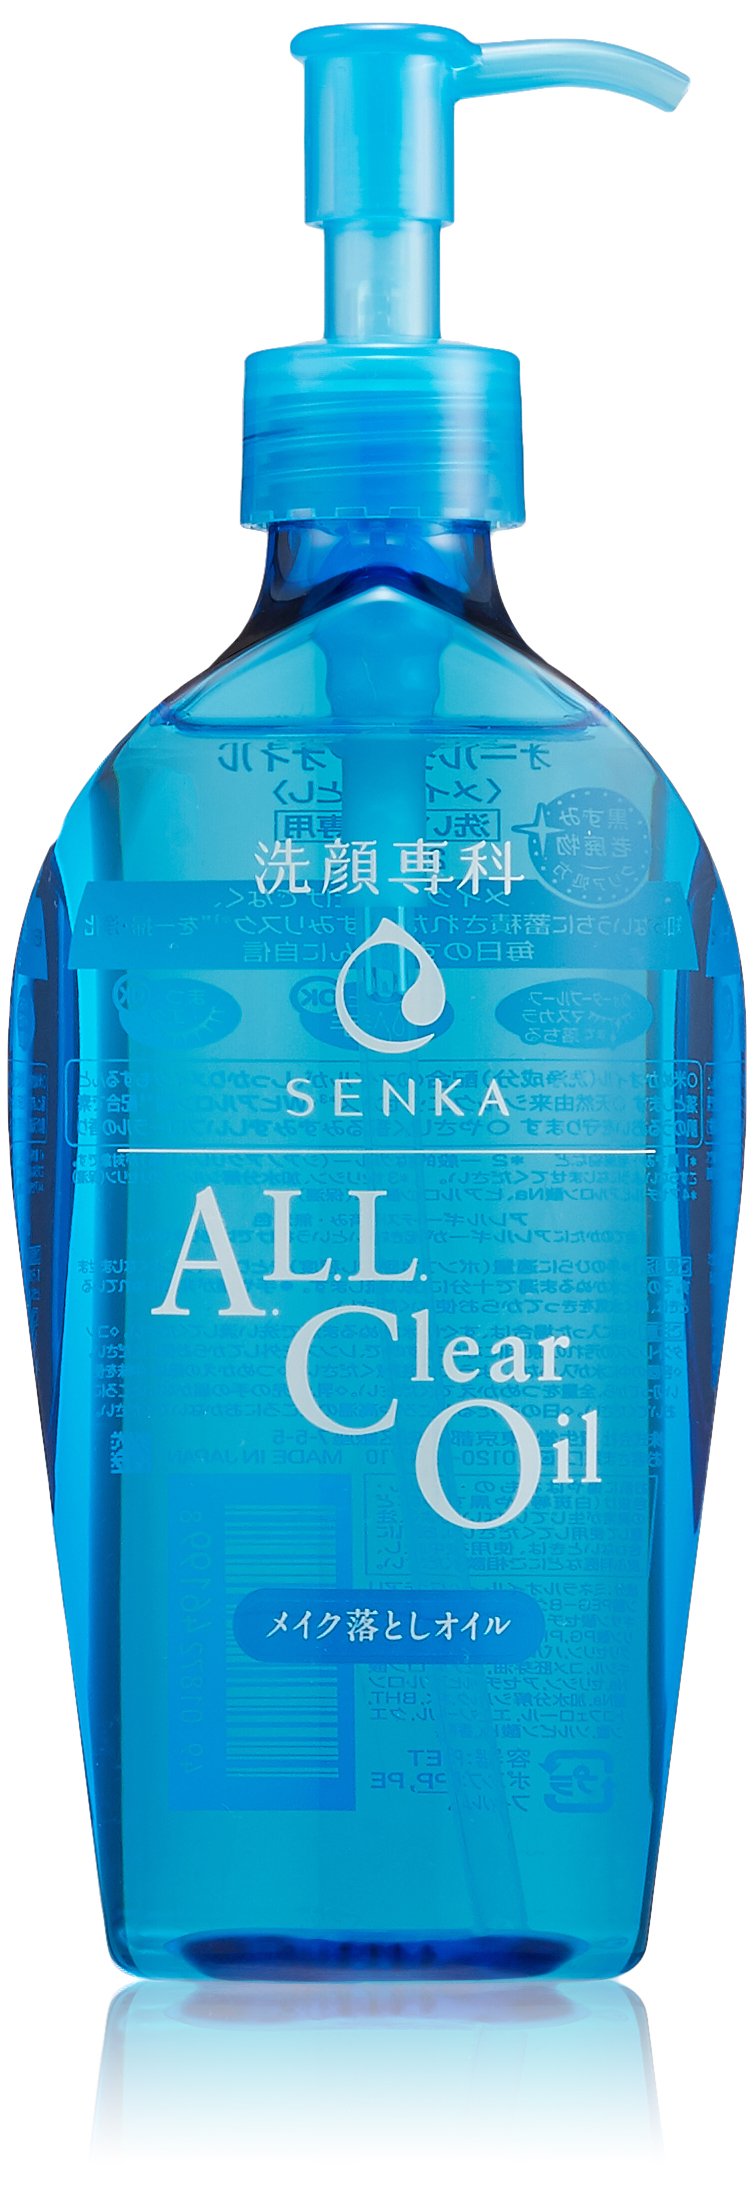 Гидрофильное масло для снятия макияжа SHISEIDO FINETODAY Senka All Clear Oil 230мл